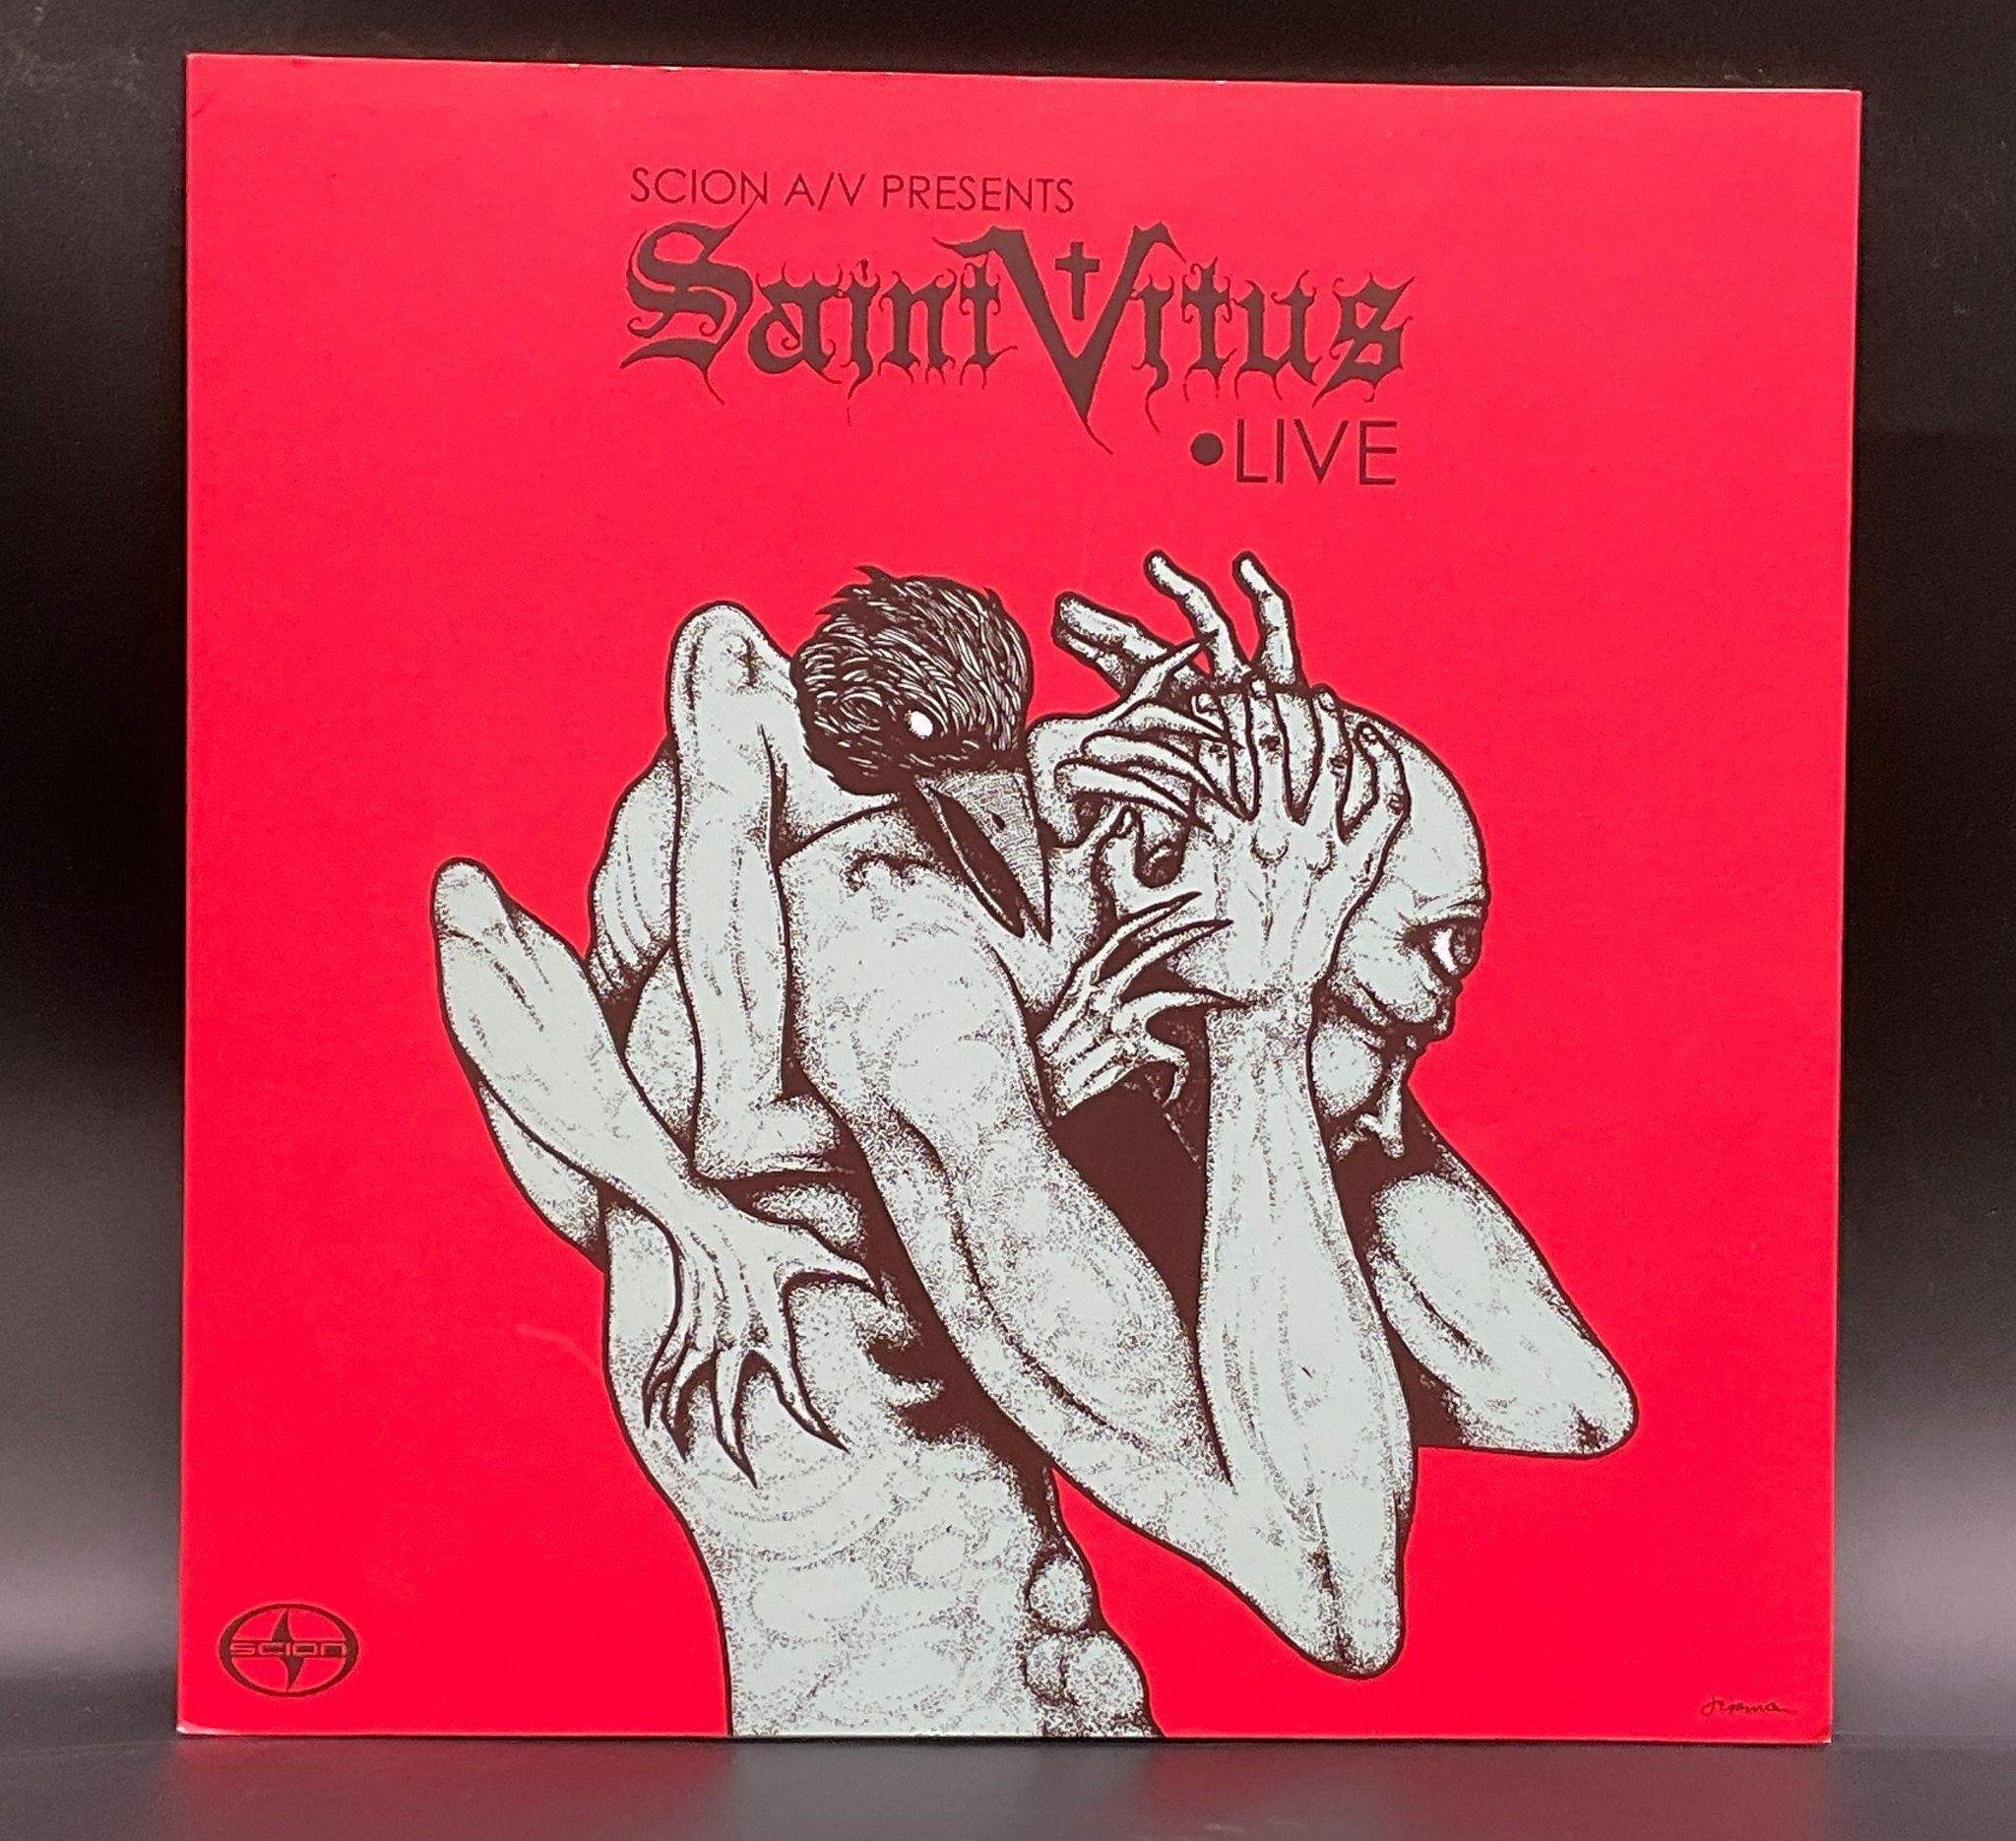 2012 St Vitus "Saint Vitus Live" Lt Ed Promo 12"